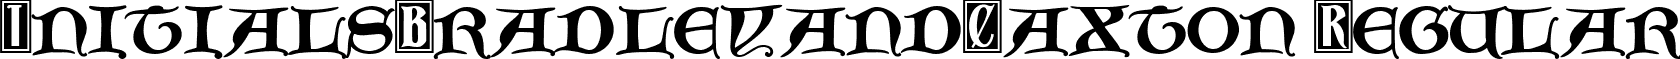 InitialsBradleyandCaxton Regular font - initialsbradleyandcaxton-normal.ttf